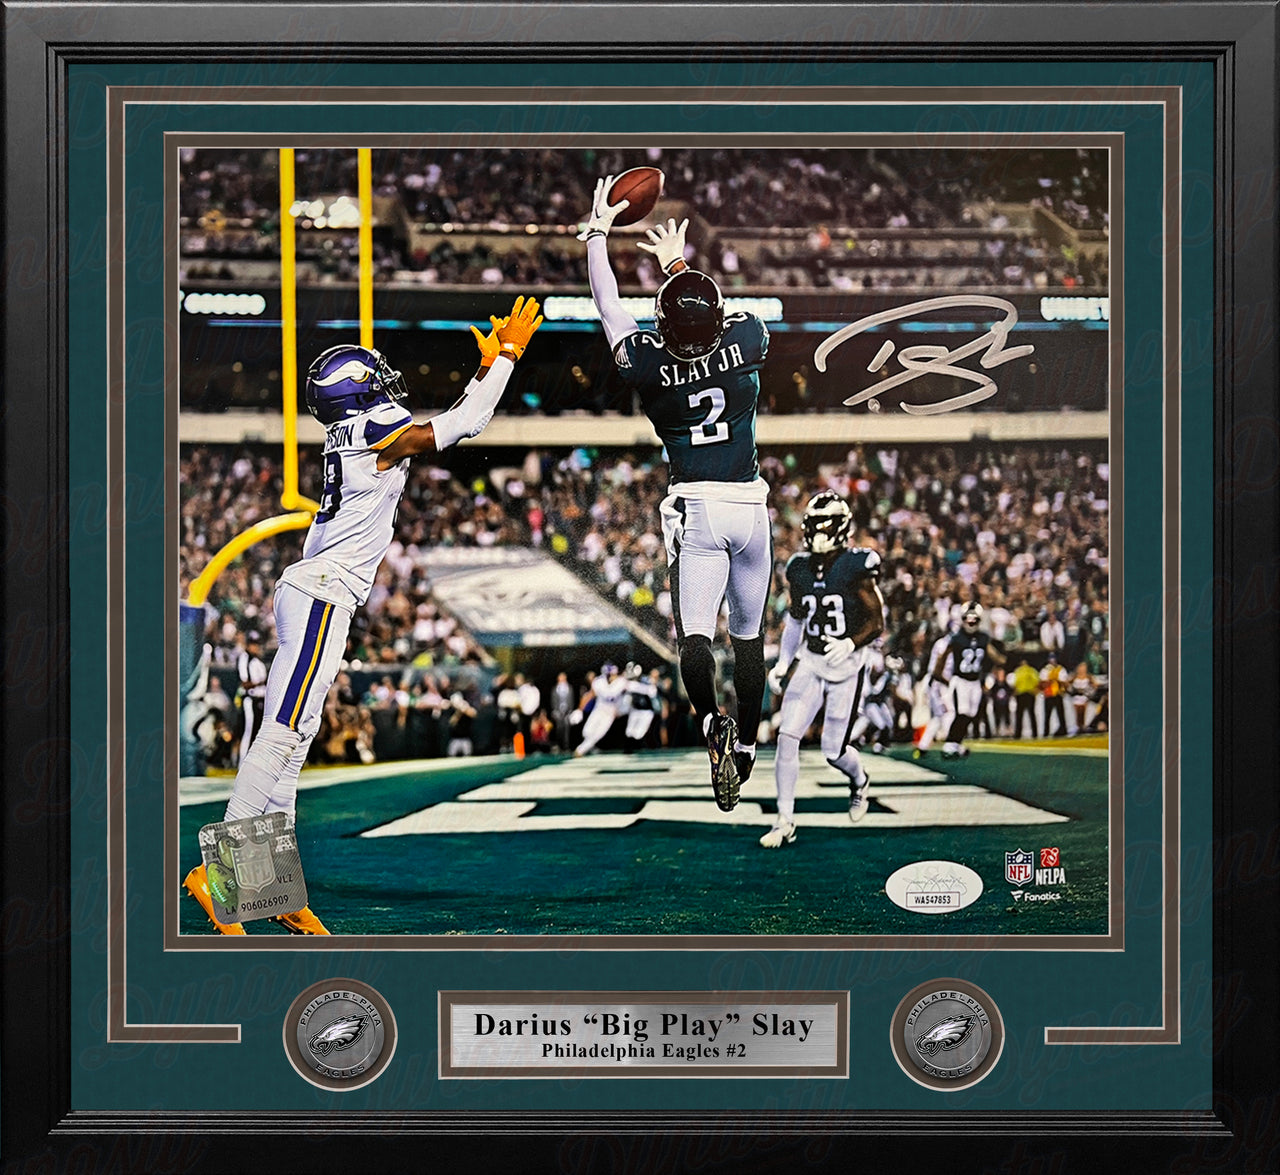 AJ Brown Philadelphia Eagles Autographed Jersey - Dynasty Sports & Framing